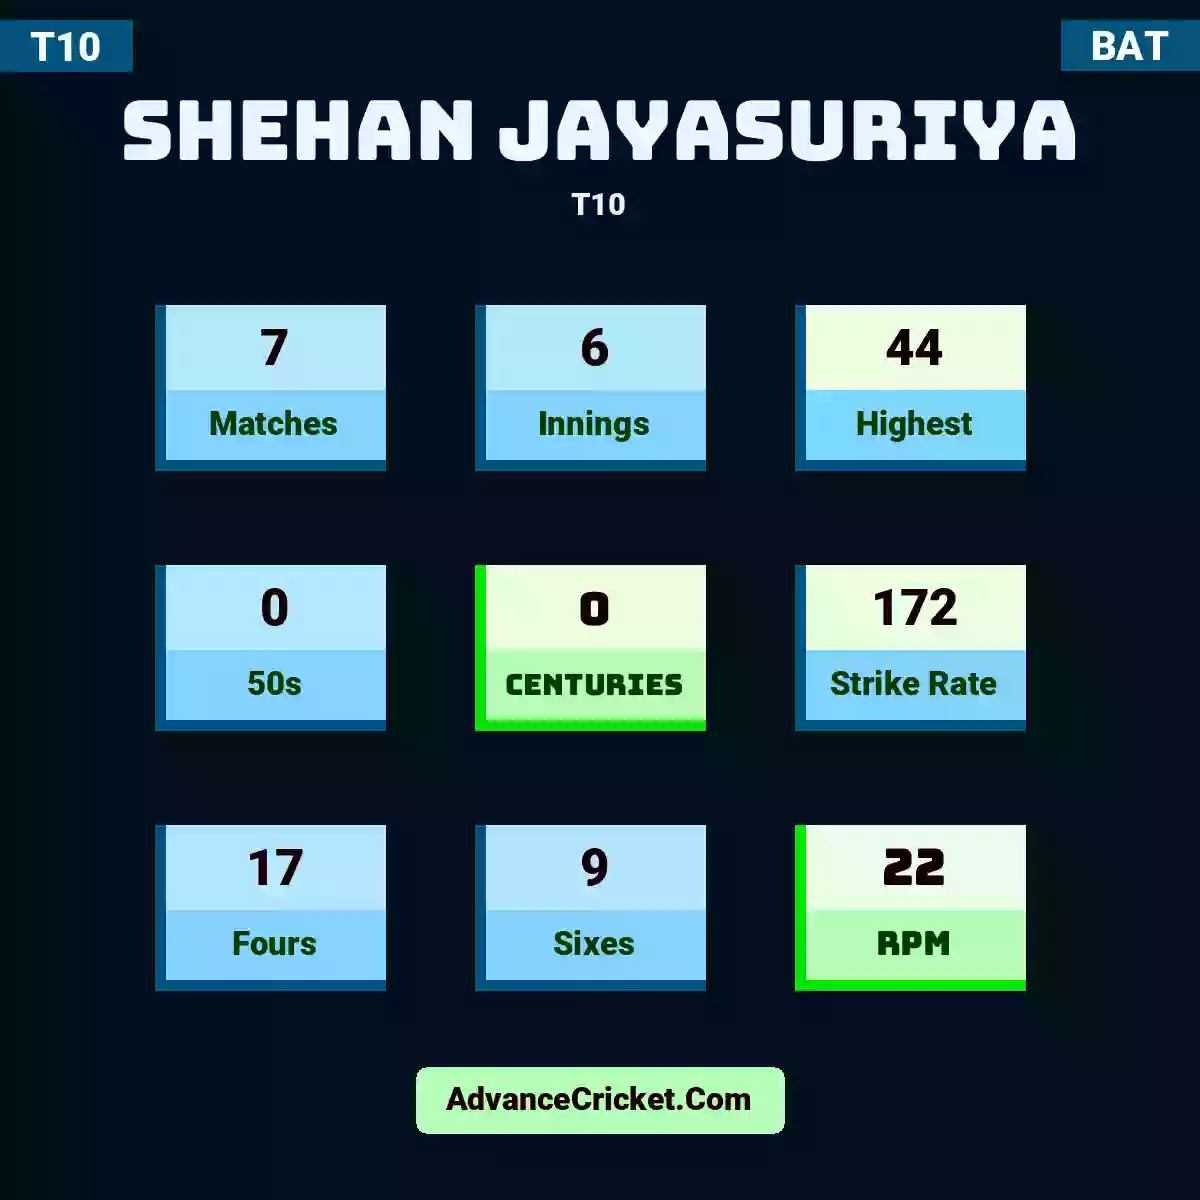 Shehan Jayasuriya T10 , Shehan Jayasuriya played 7 matches, scored 44 runs as highest, 0 half-centuries, and 0 centuries, with a strike rate of 172. S.Jayasuriya hit 17 fours and 9 sixes, with an RPM of 22.